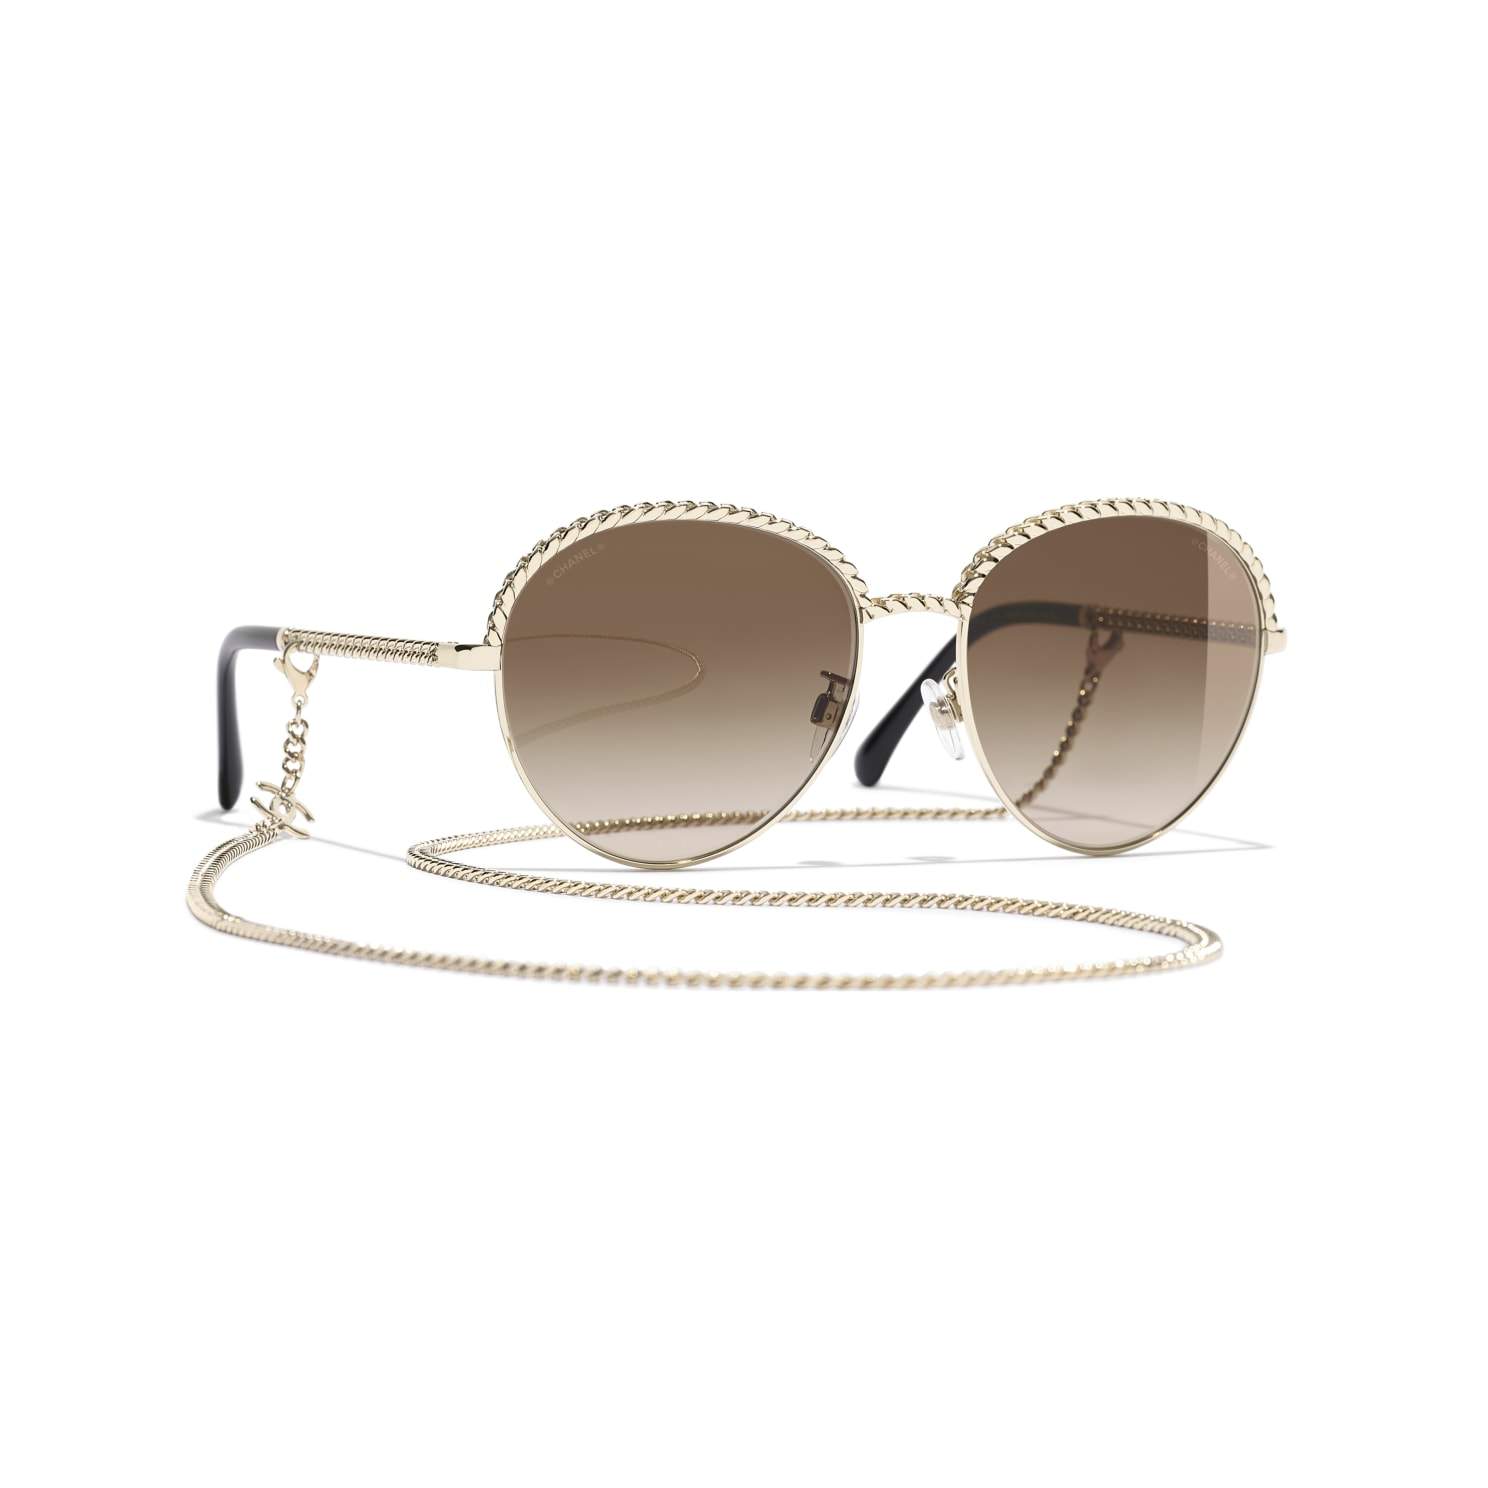 Sunglasses Chanel Chaîne Gold CH4242 C395/S5 55-17 Gradient in stock, Price 266,67 €